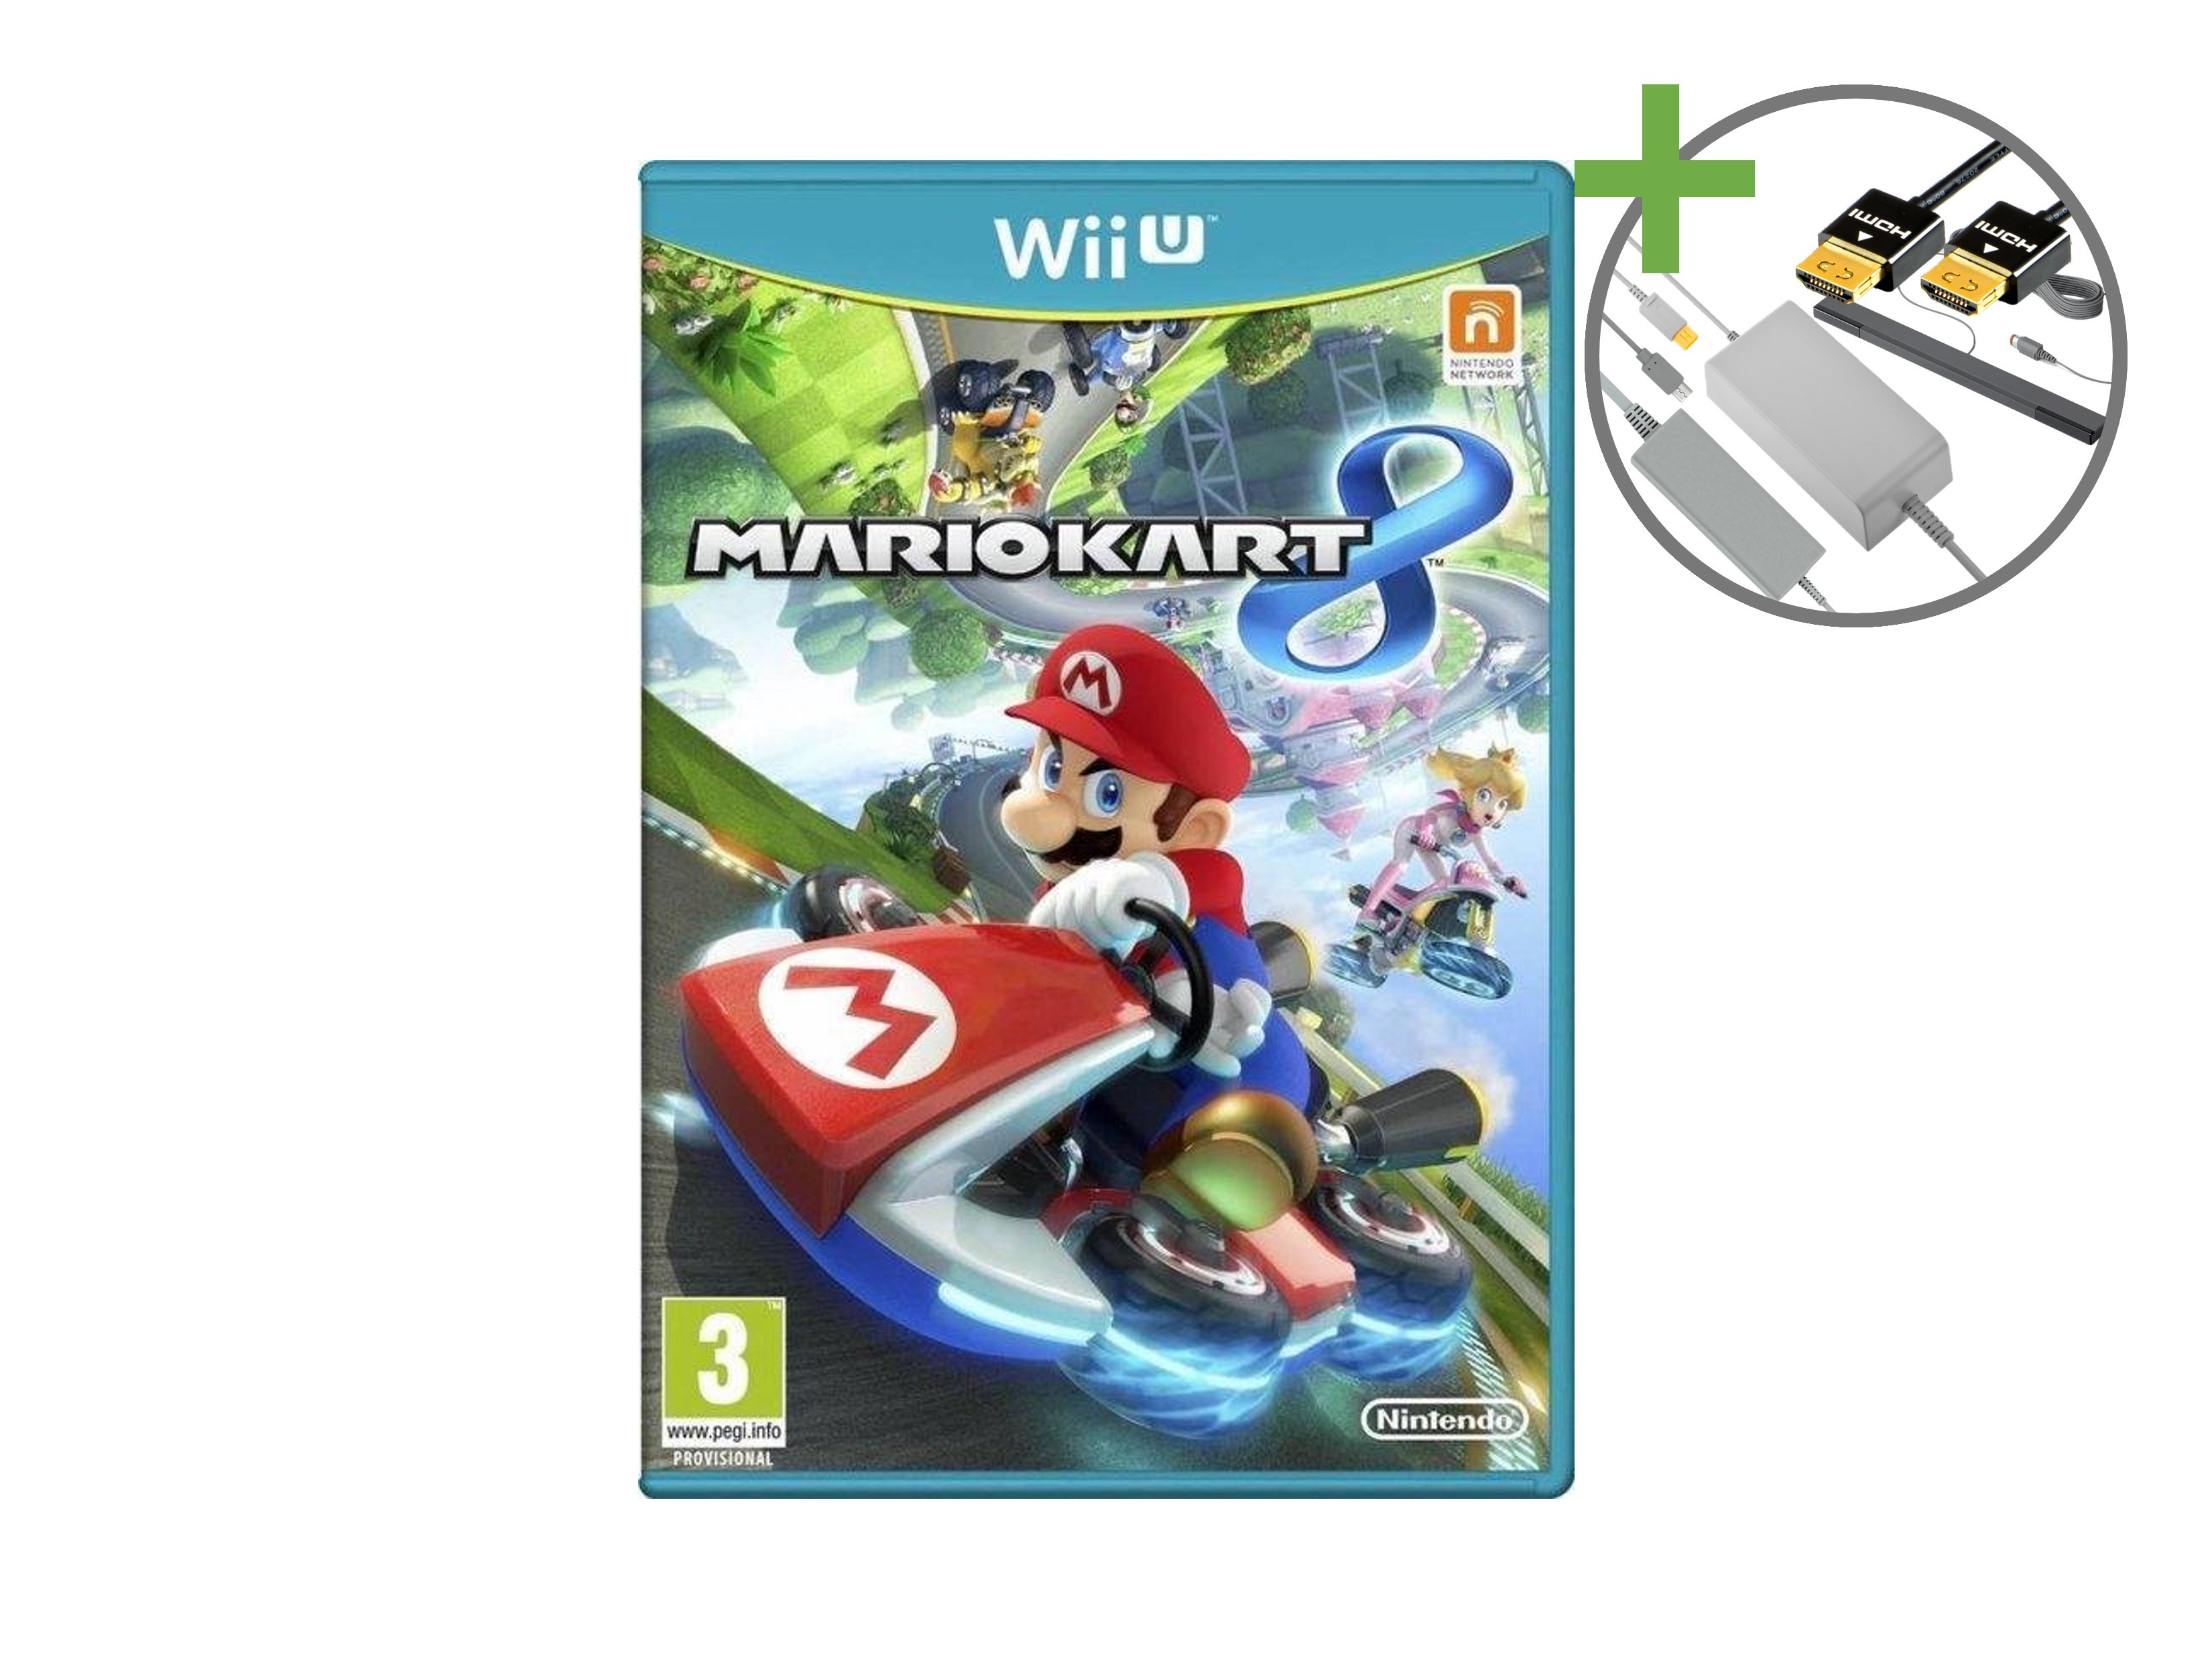 Nintendo Wii U Starter Pack - Mario Kart 8 Edition [Complete] - Wii U Hardware - 5